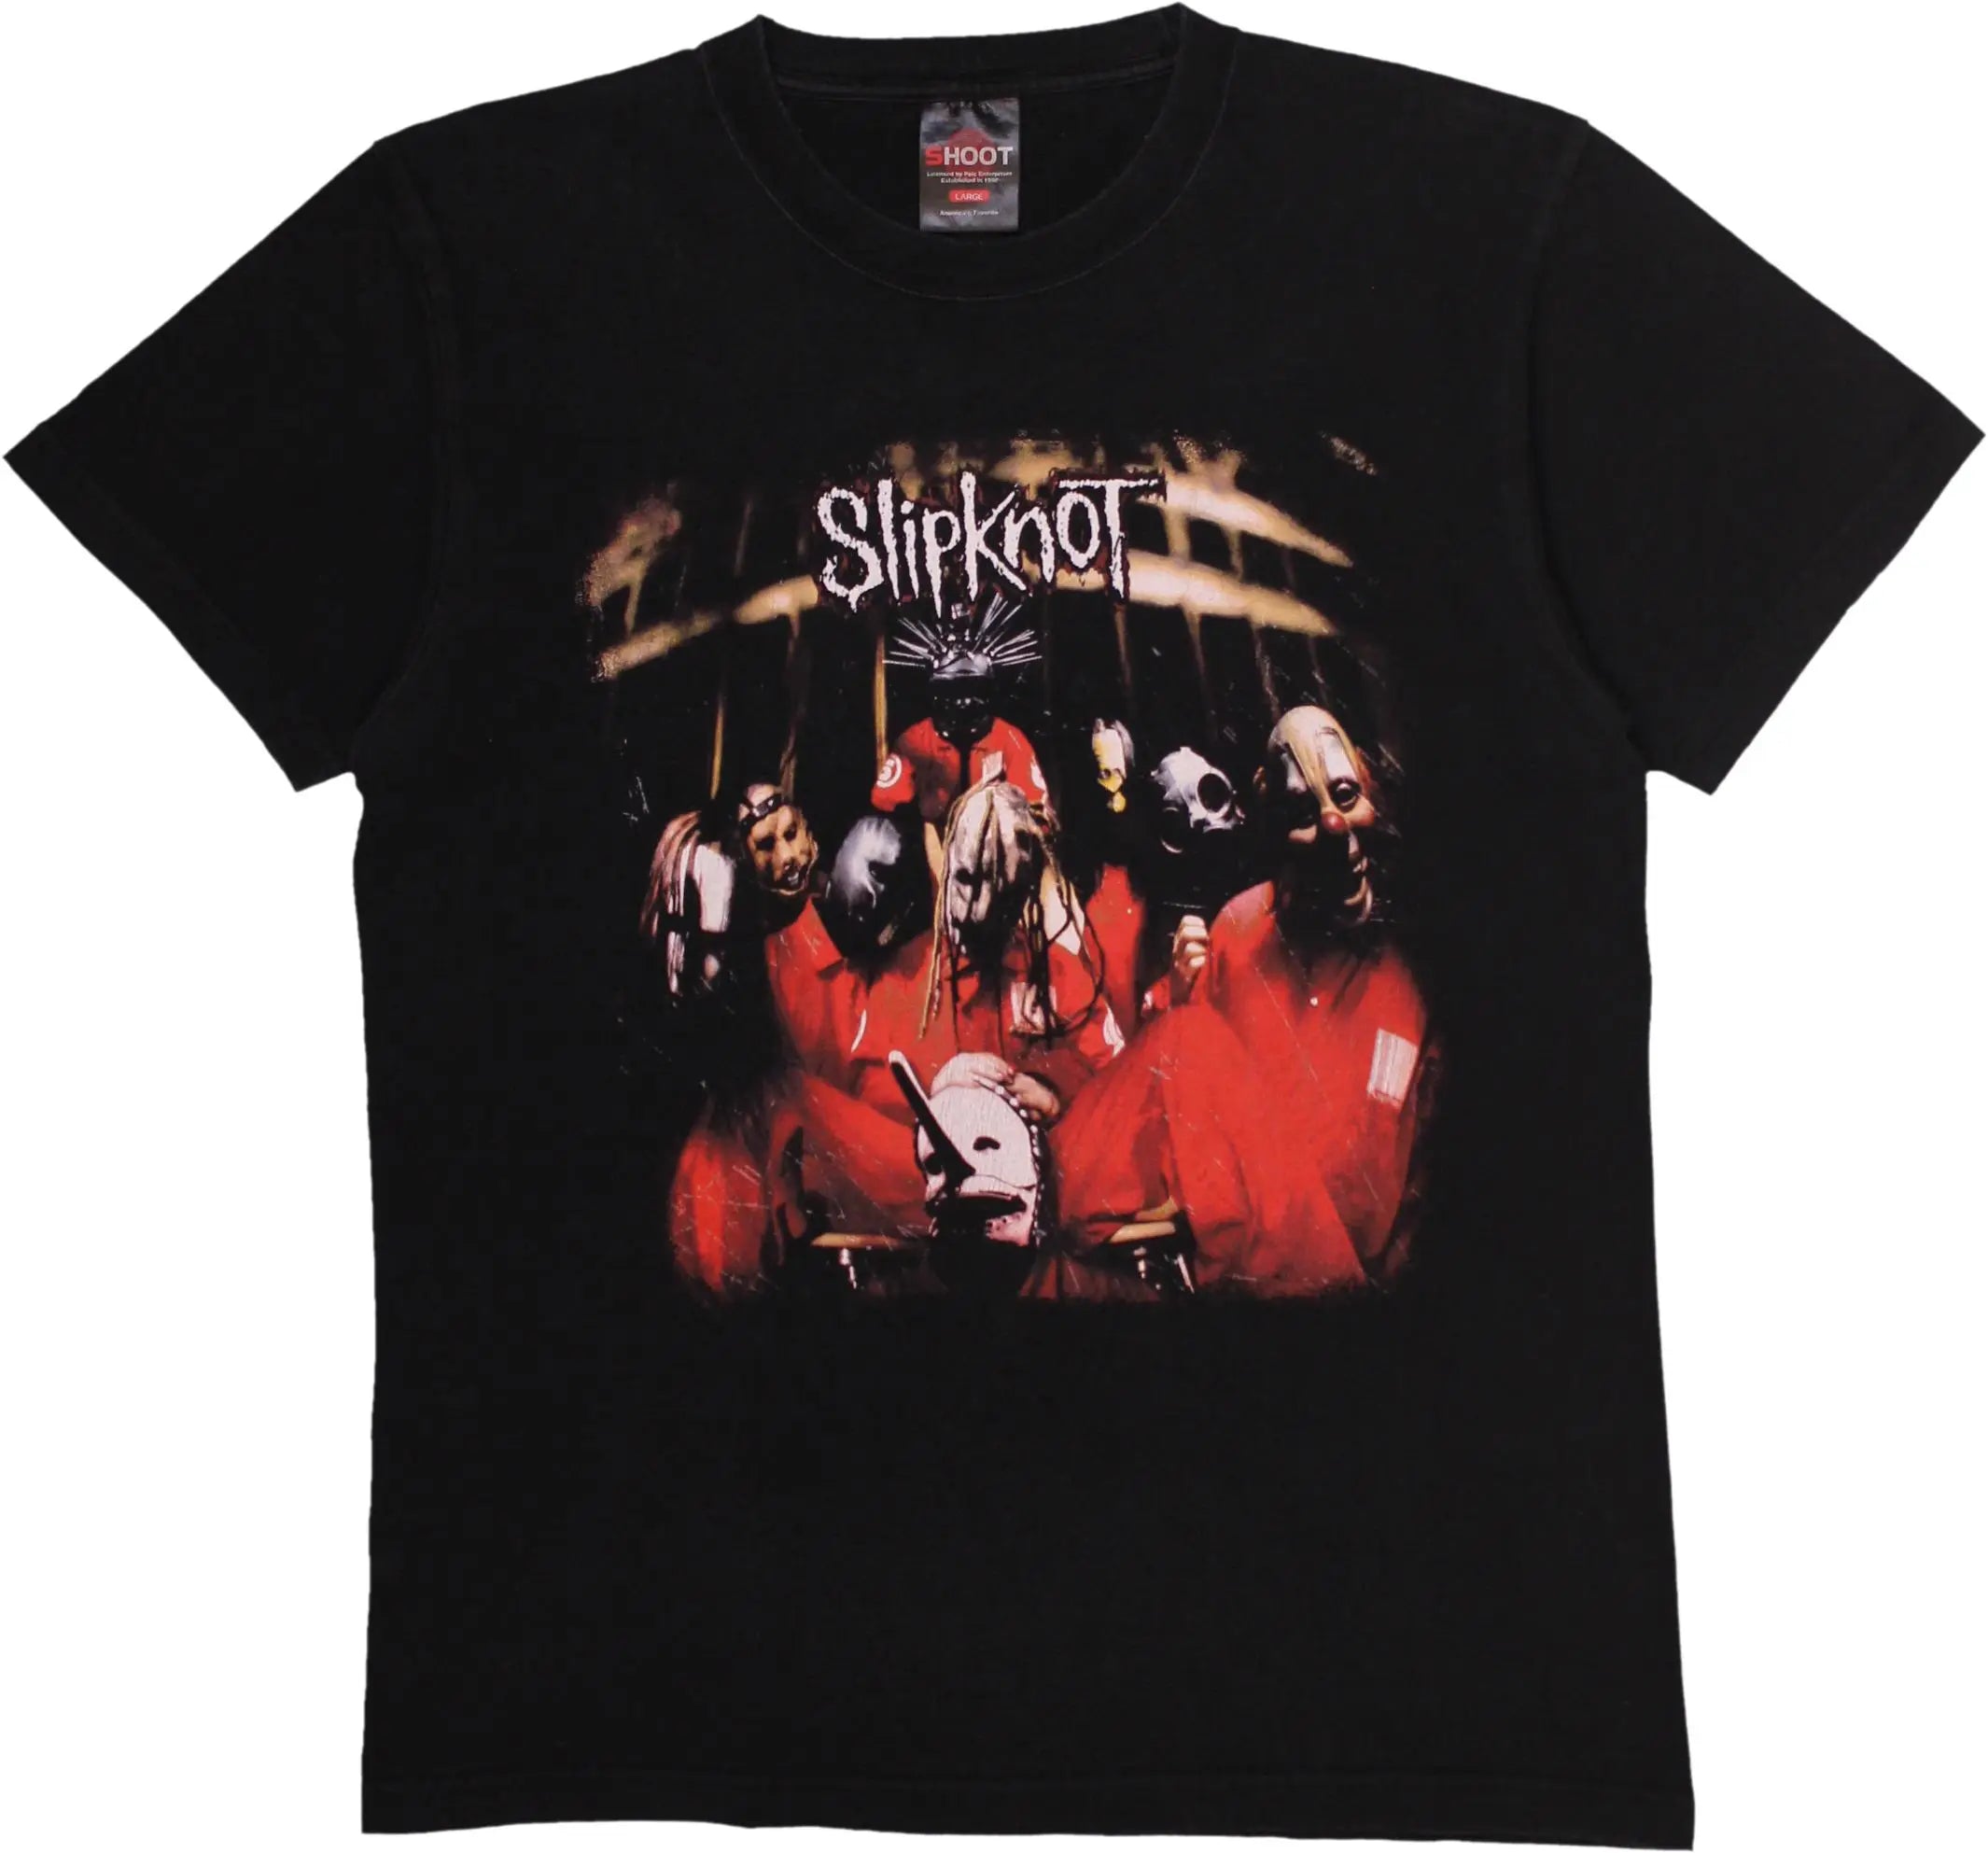 Shoot - Vintage Slipknot Band T-Shirt- ThriftTale.com - Vintage and second handclothing